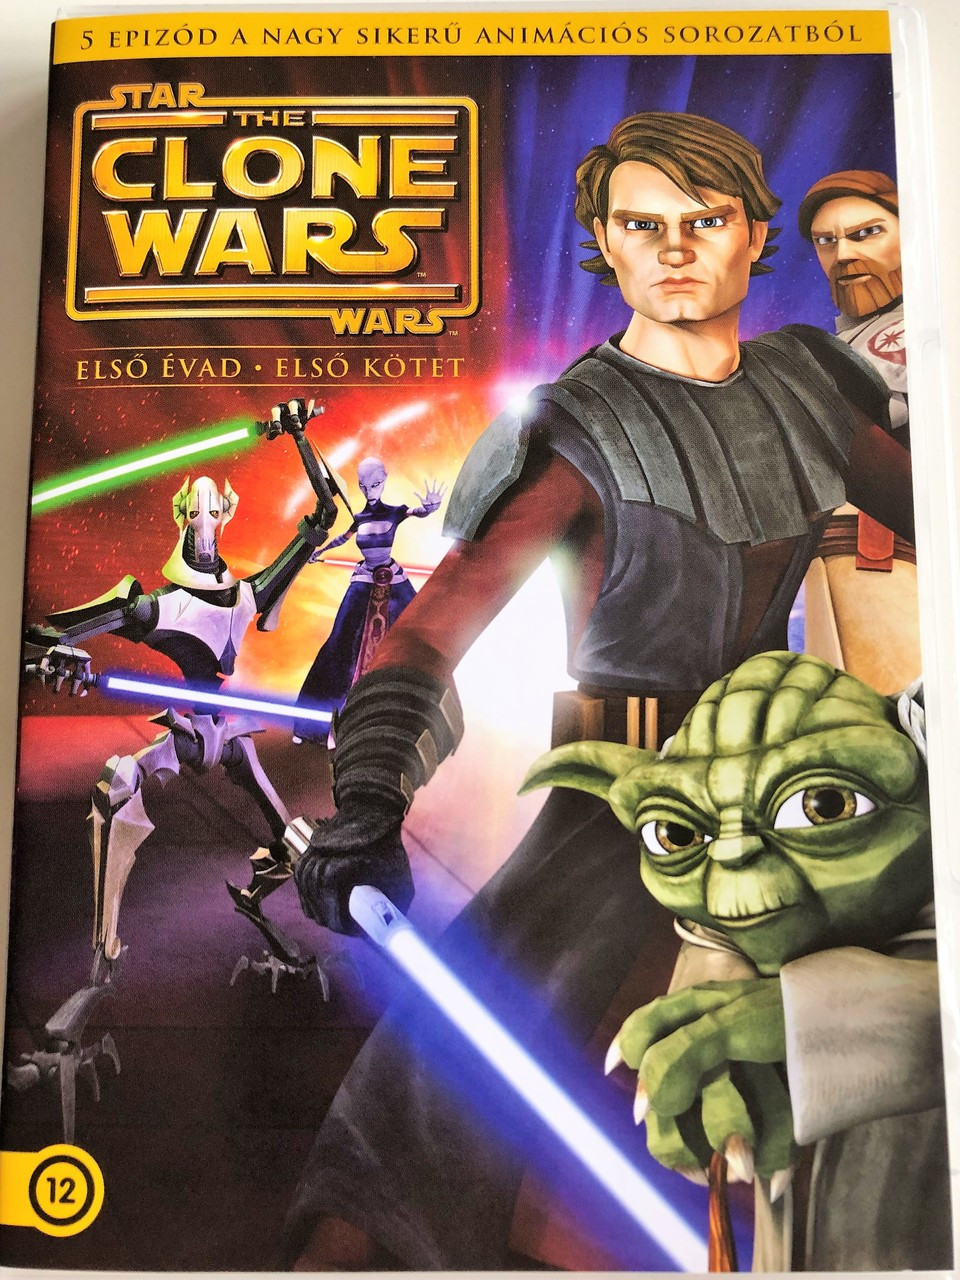 Star Wars The Clone Wars Season 1 - Volume 1 DVD 2008 Star Wars: A klónok  háborúja - Első évad - Első kötet / Animated TV Series / Created by George  Lucas / 5 episodes on DVD - bibleinmylanguage